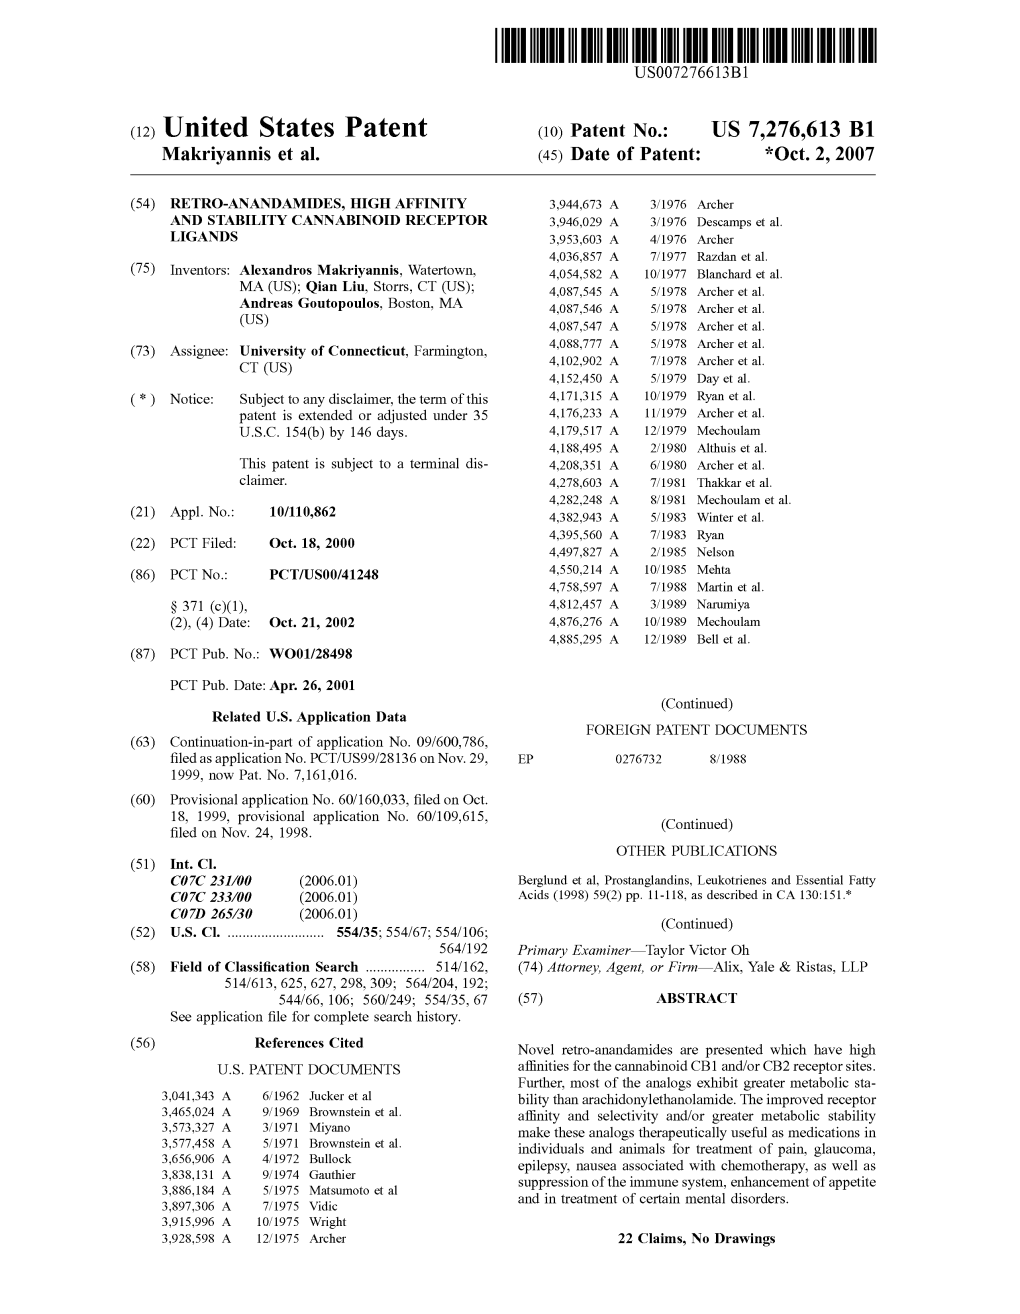 (12) United States Patent (10) Patent No.: US 7.276613 B1 Makriyannis Et Al